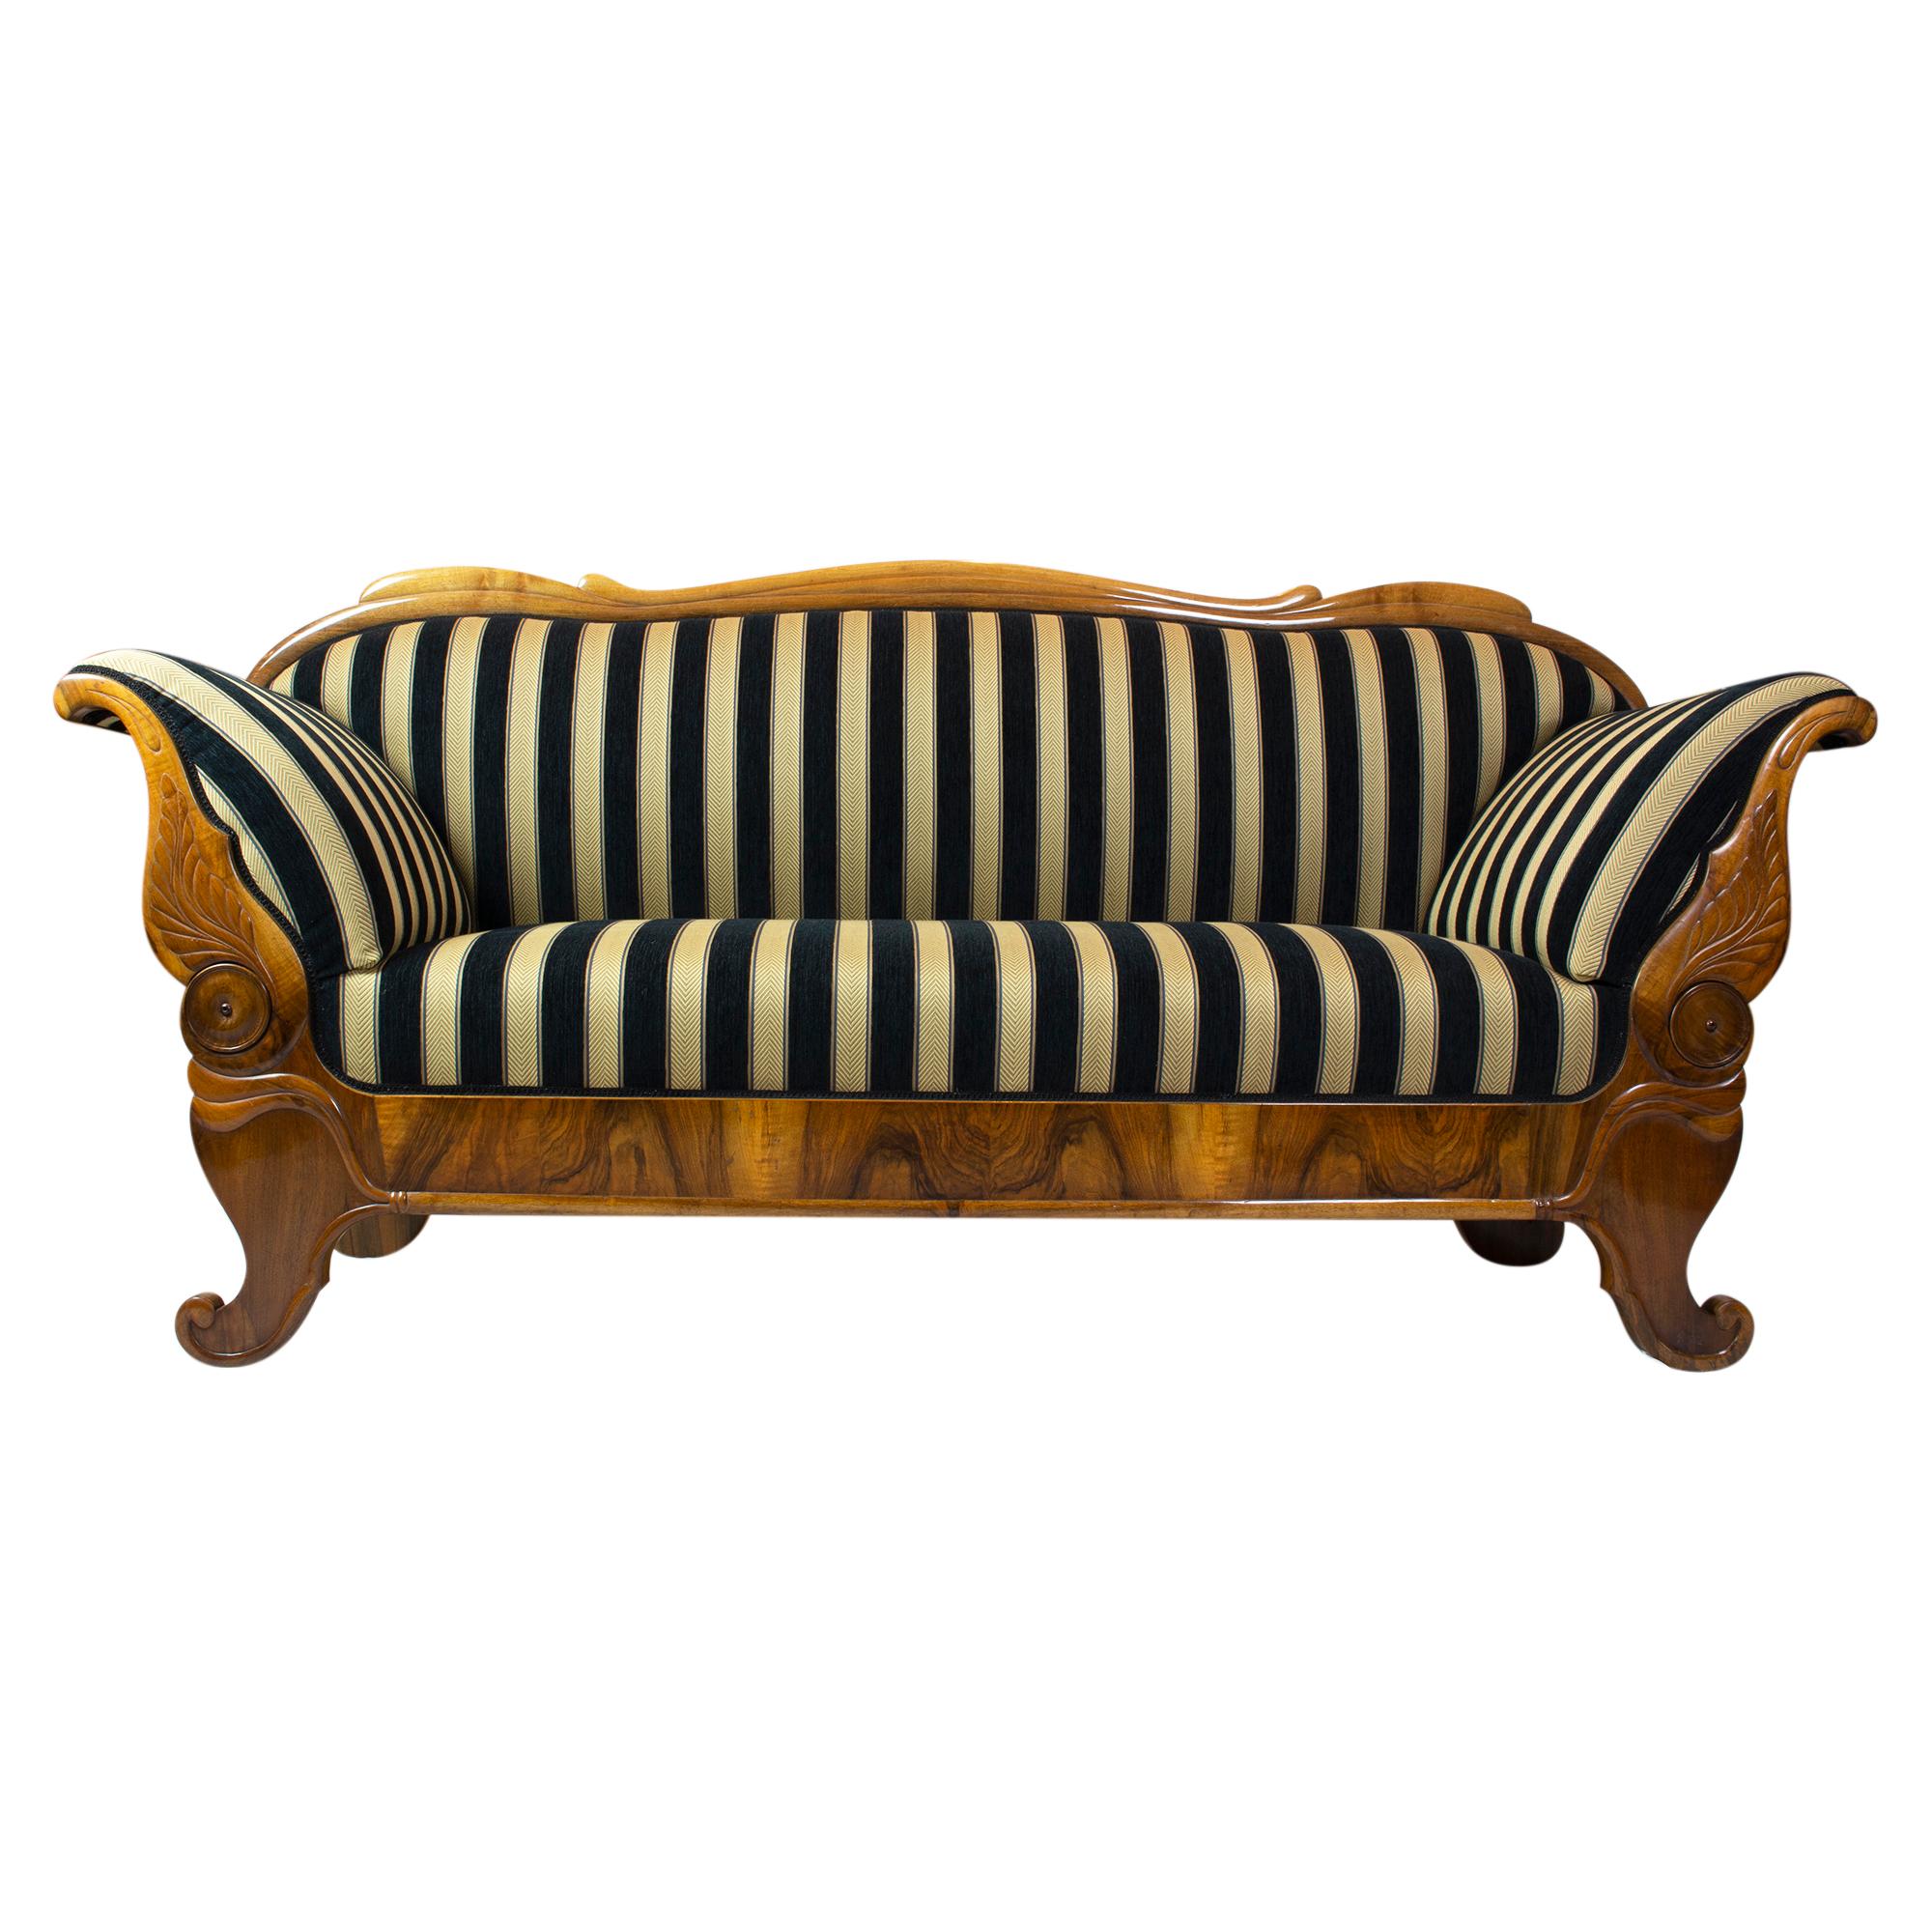 Early 19th Century Biedermeier Walnut Sofa from Germany For Sale 3